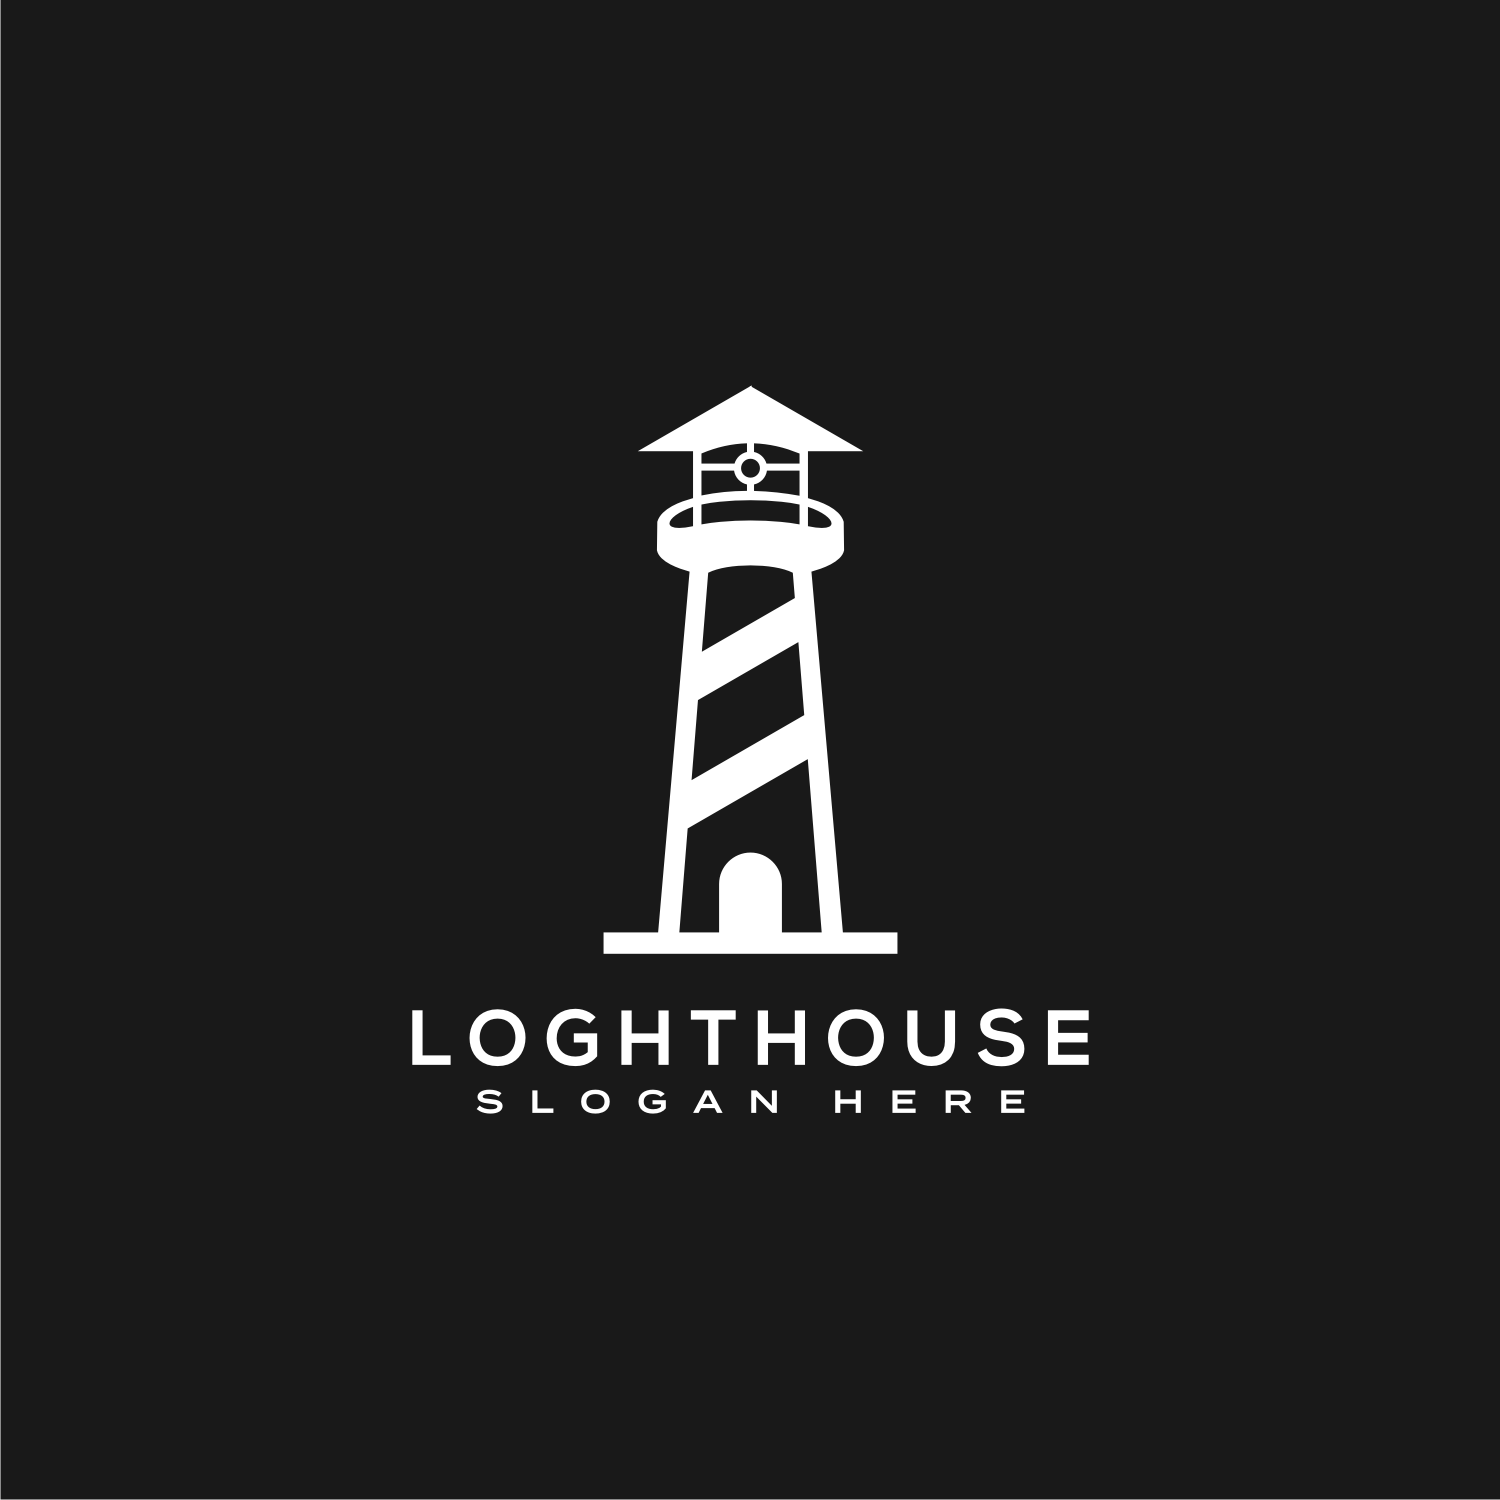 Lighthouse Logo Vector Design cover image.